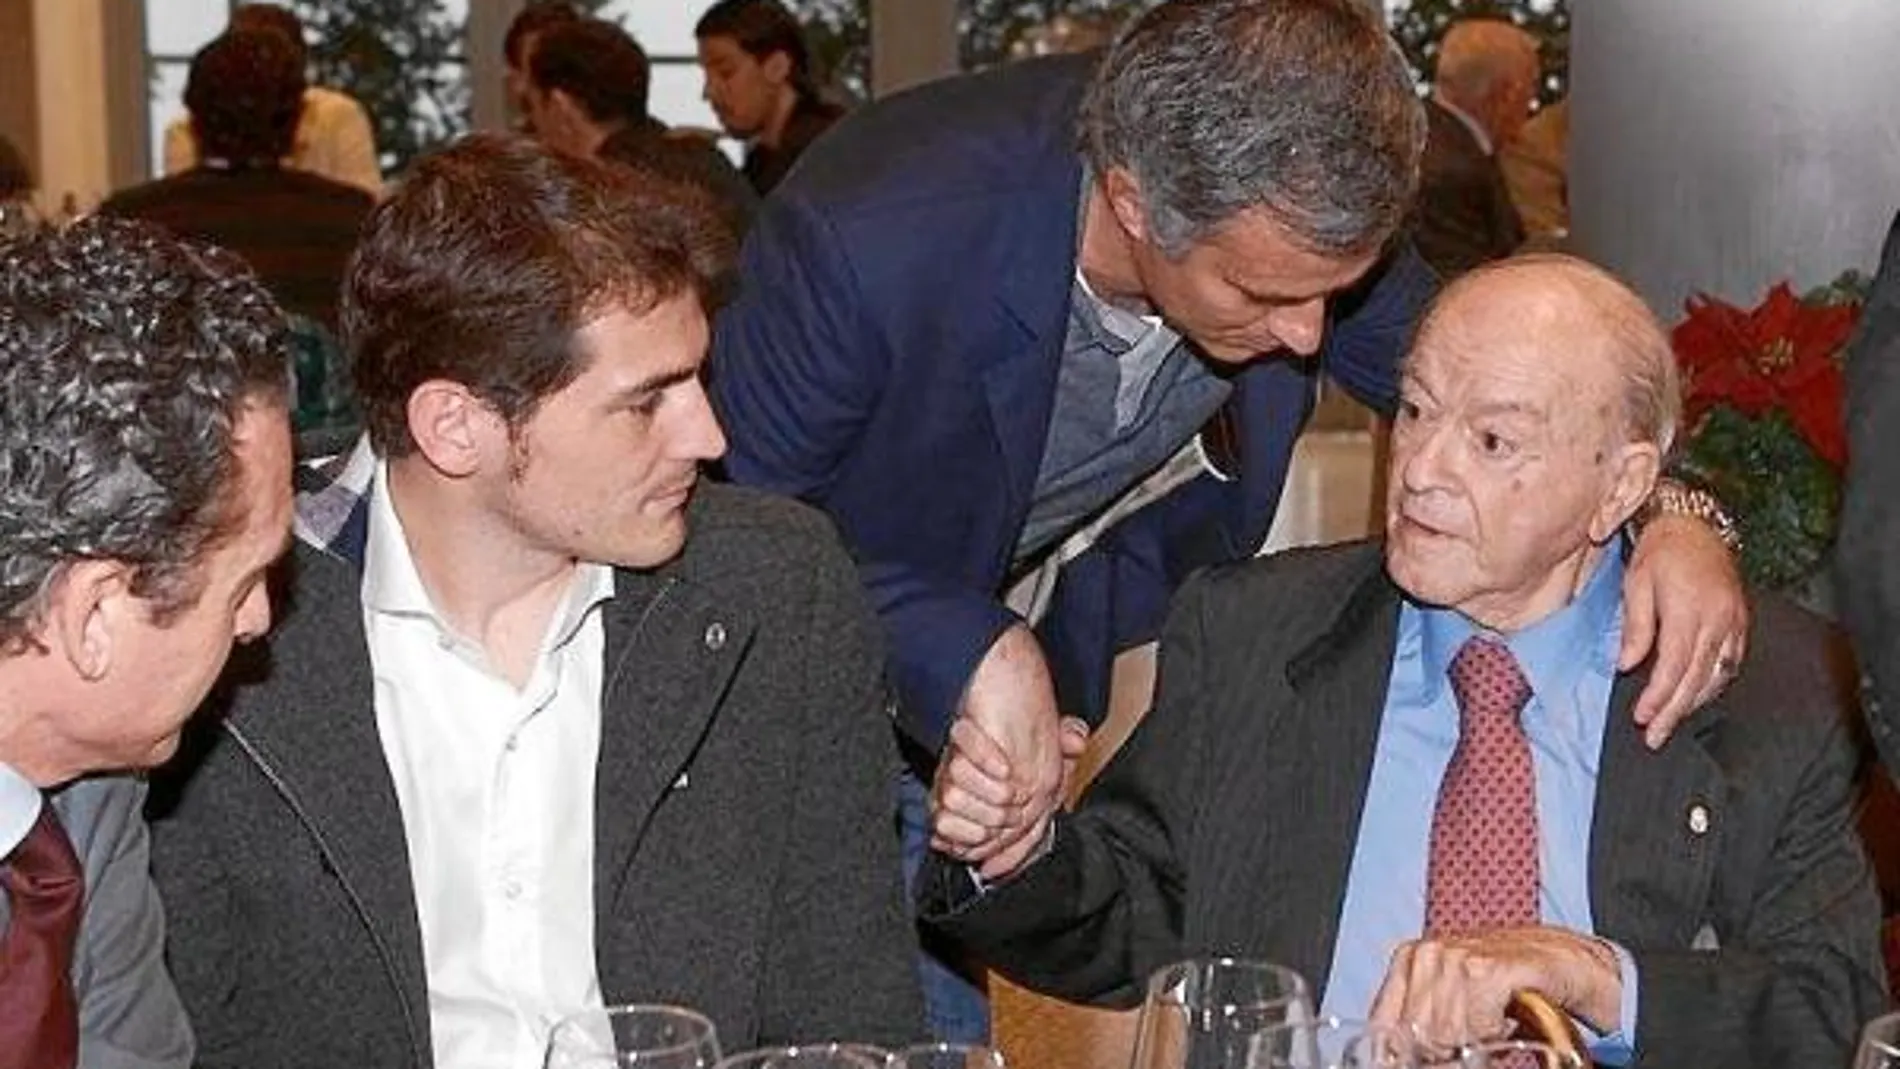 José Mourinho no dudó en acudir a saludar al presidente de honor, Alfredo di Stéfano